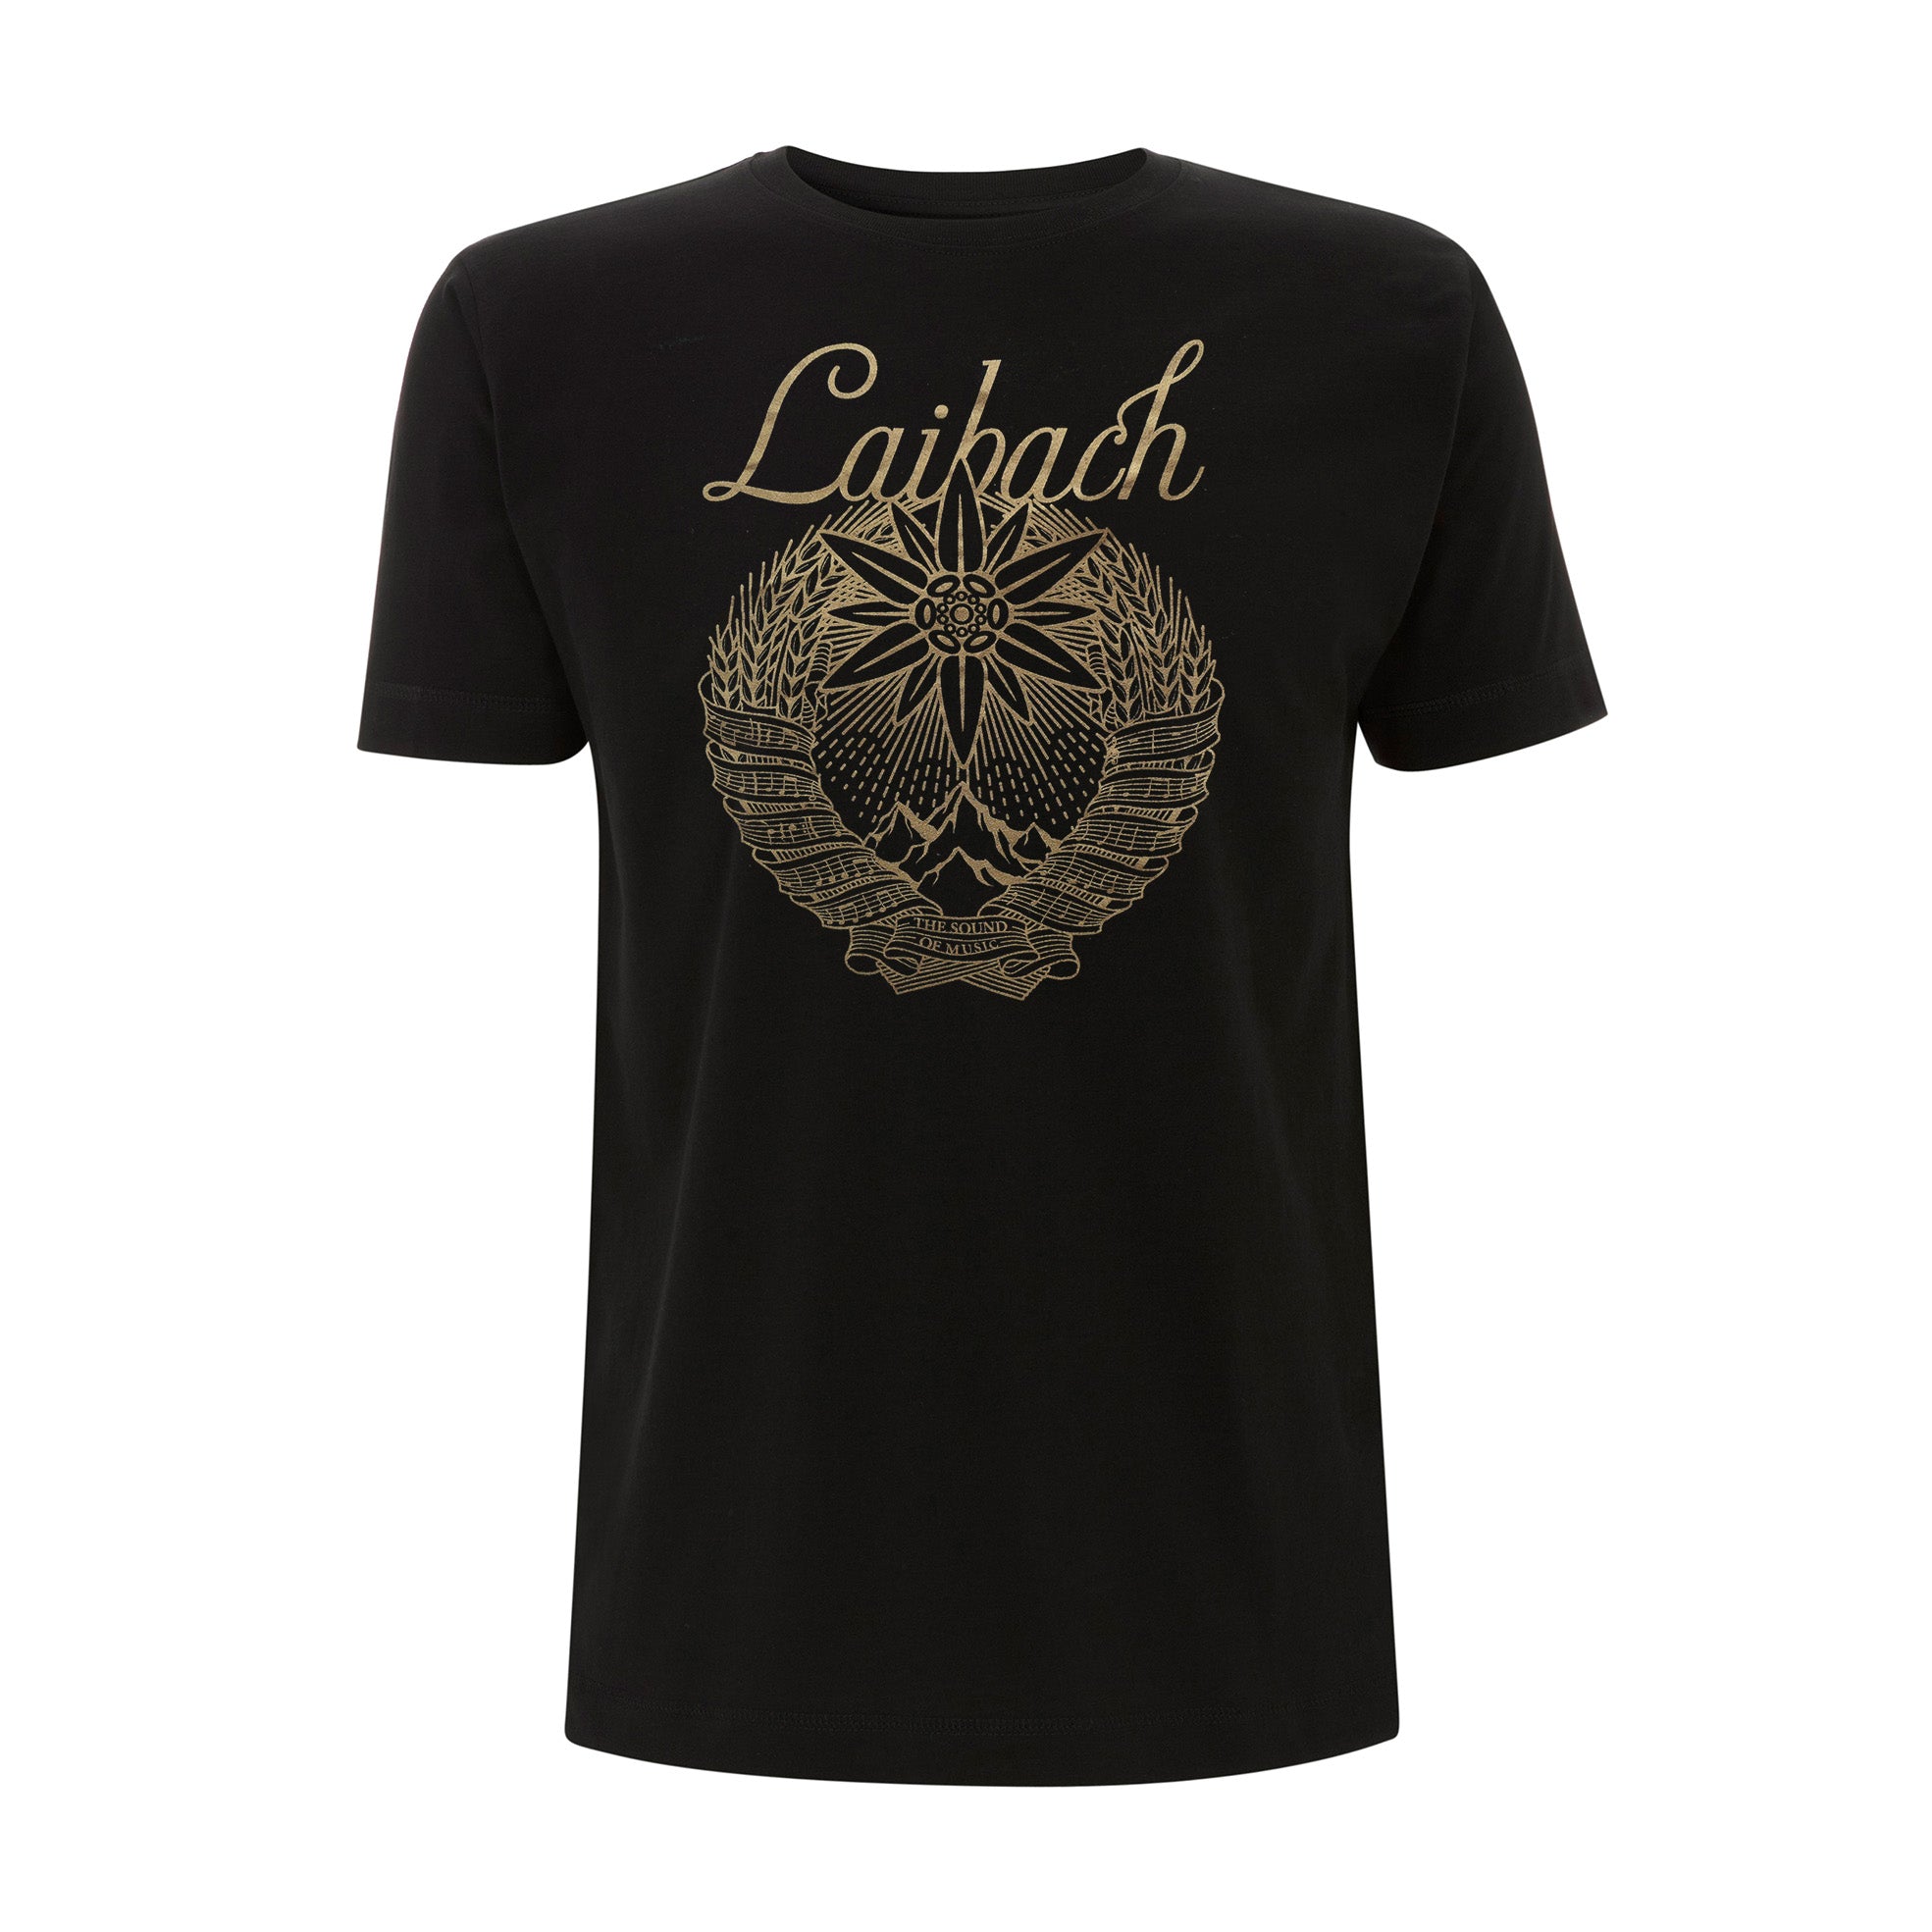 The Sound Of Music - T-shirt (Black) - Laibach WTC